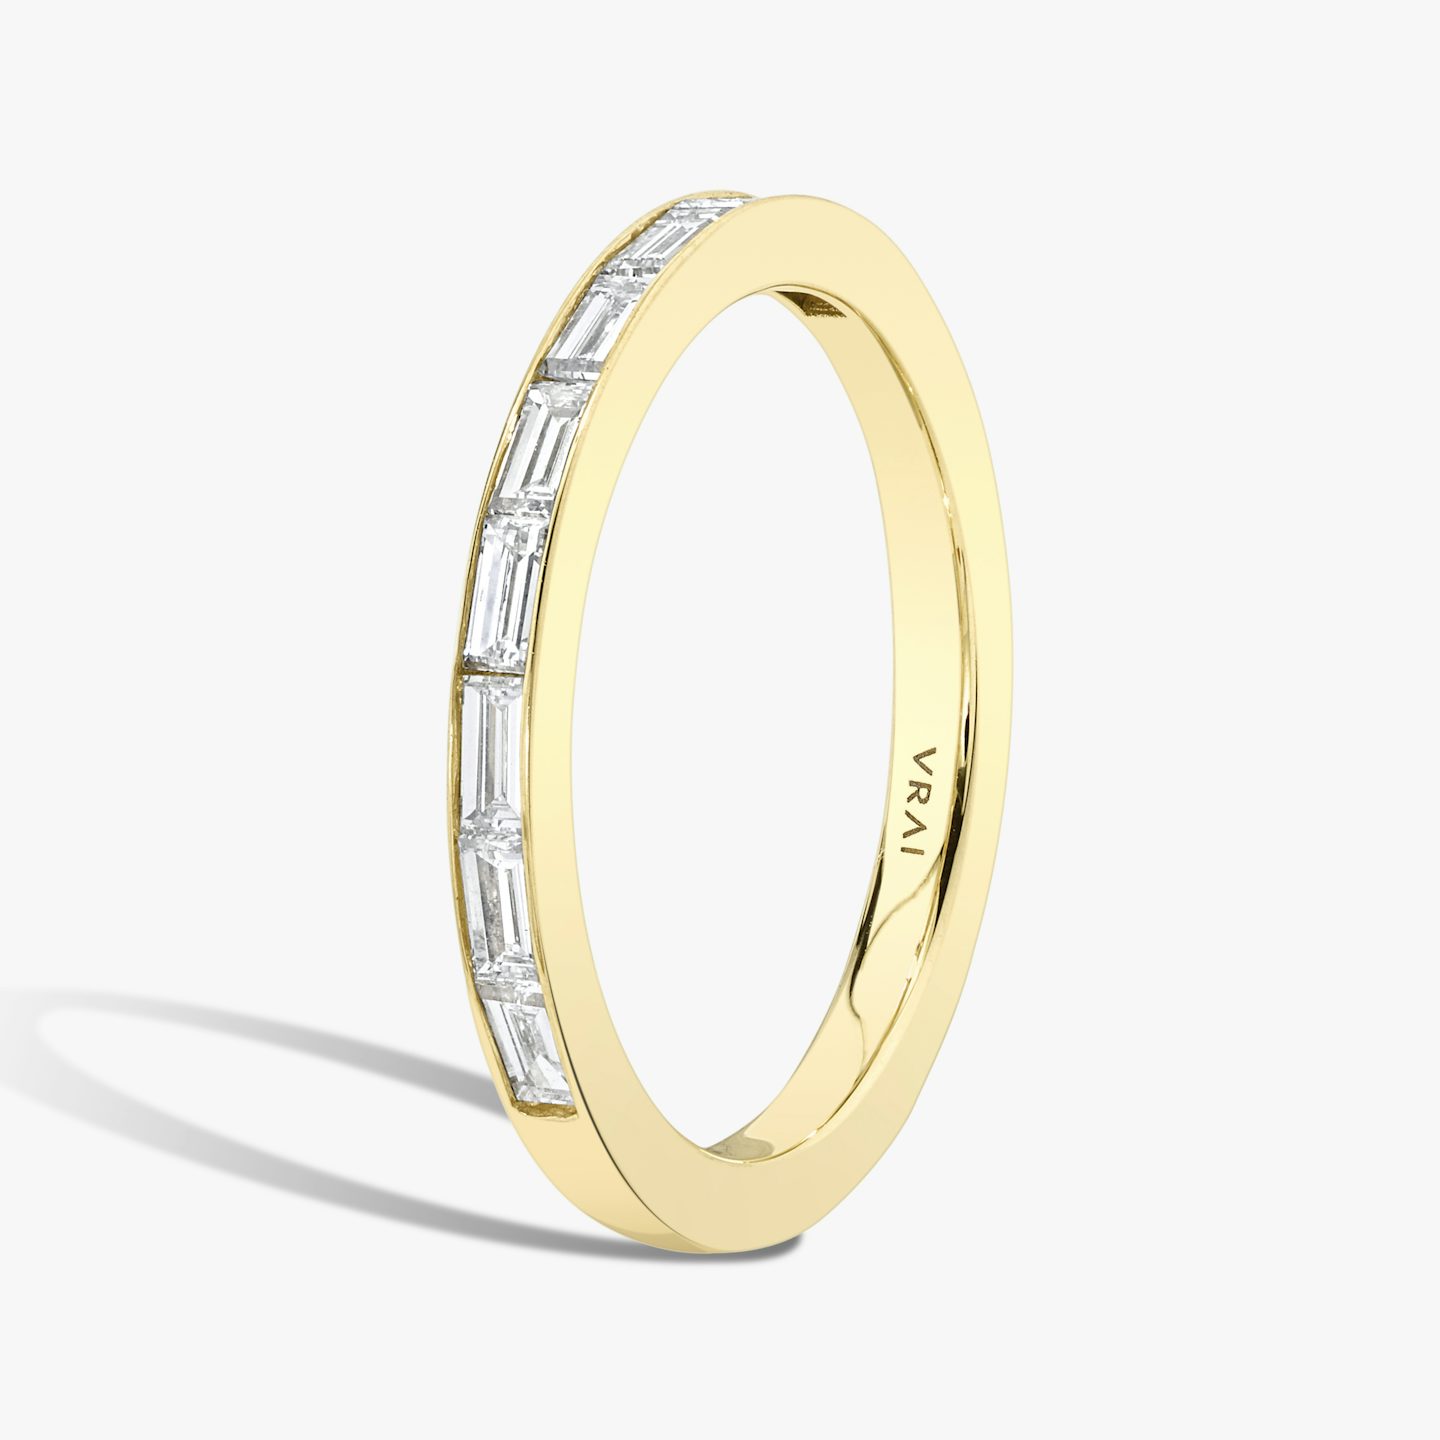 Anillo Devotion | Baguette | 18k | Oro amarillo de 18 quilates | Estilo del anillo: Medio círculo de diamantes | Ancho de banda: Grande